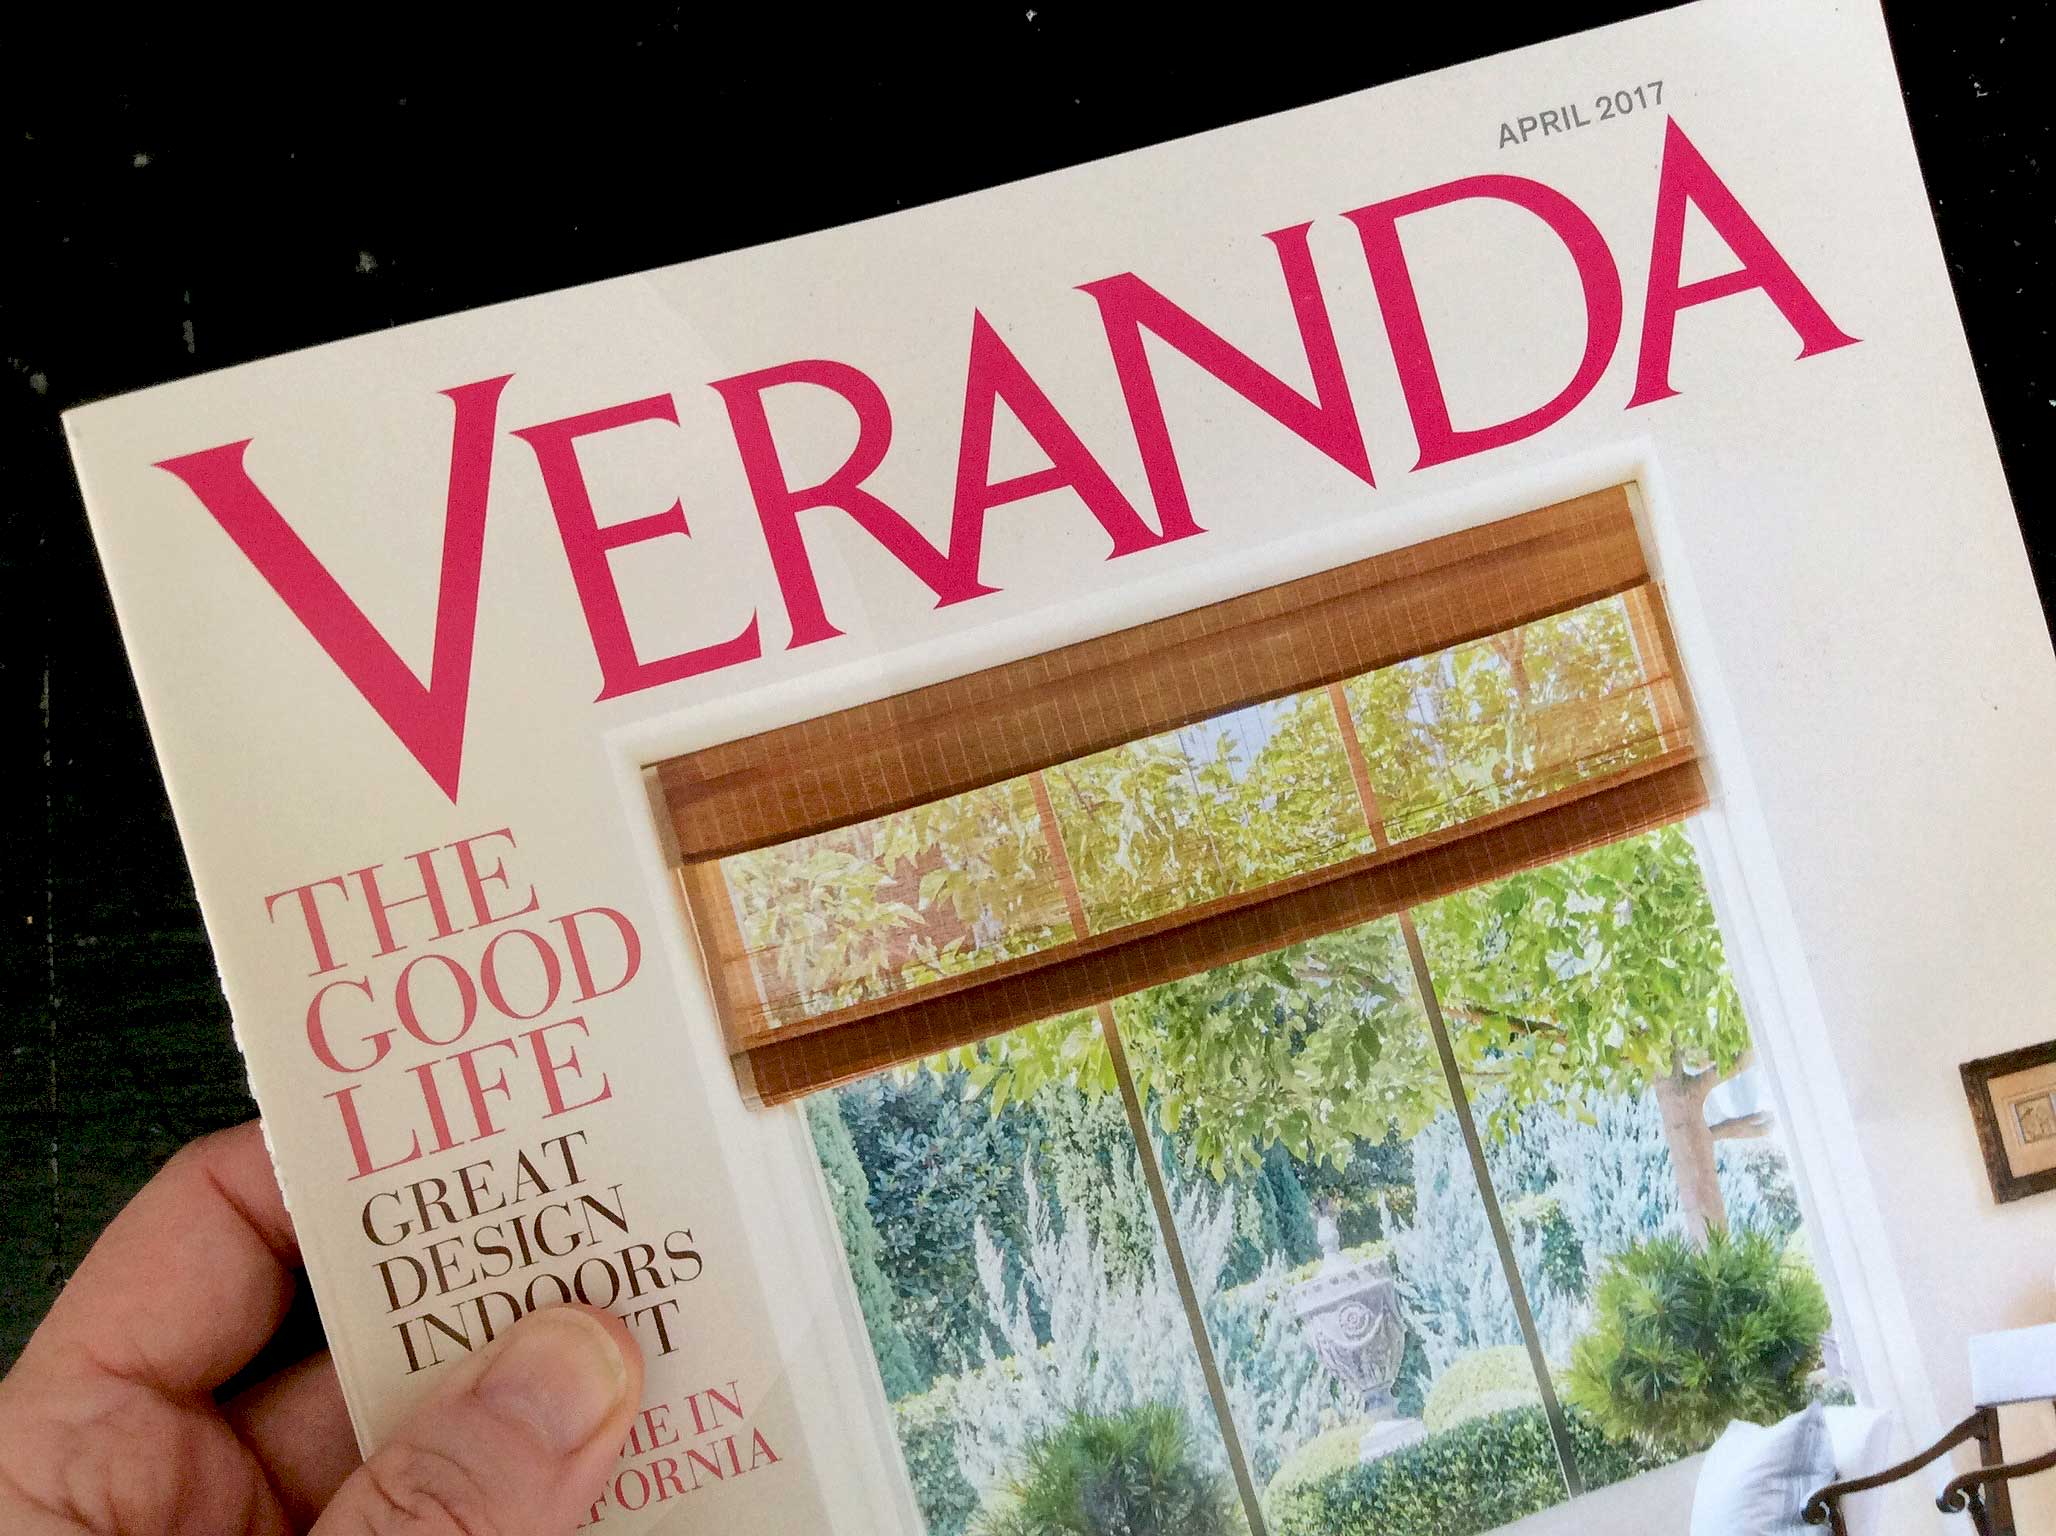 Veranda Magazine April 2017